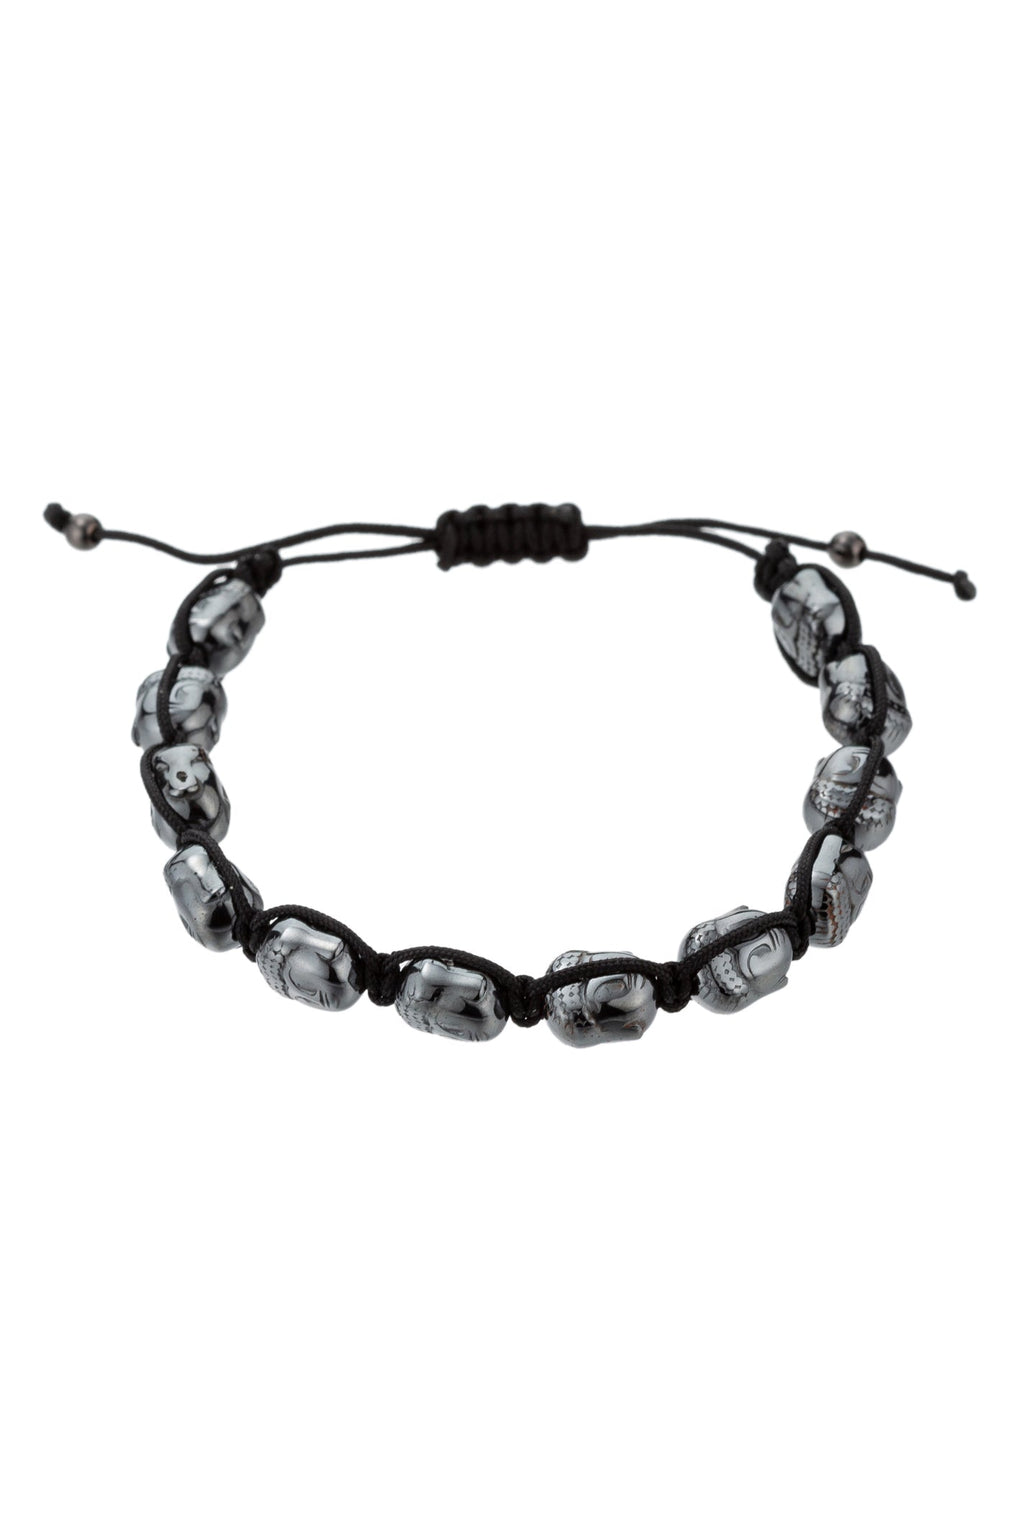 Elevate Your Spirituality with the Buddha Tetranylite Beaded Adjustable Bracelet.